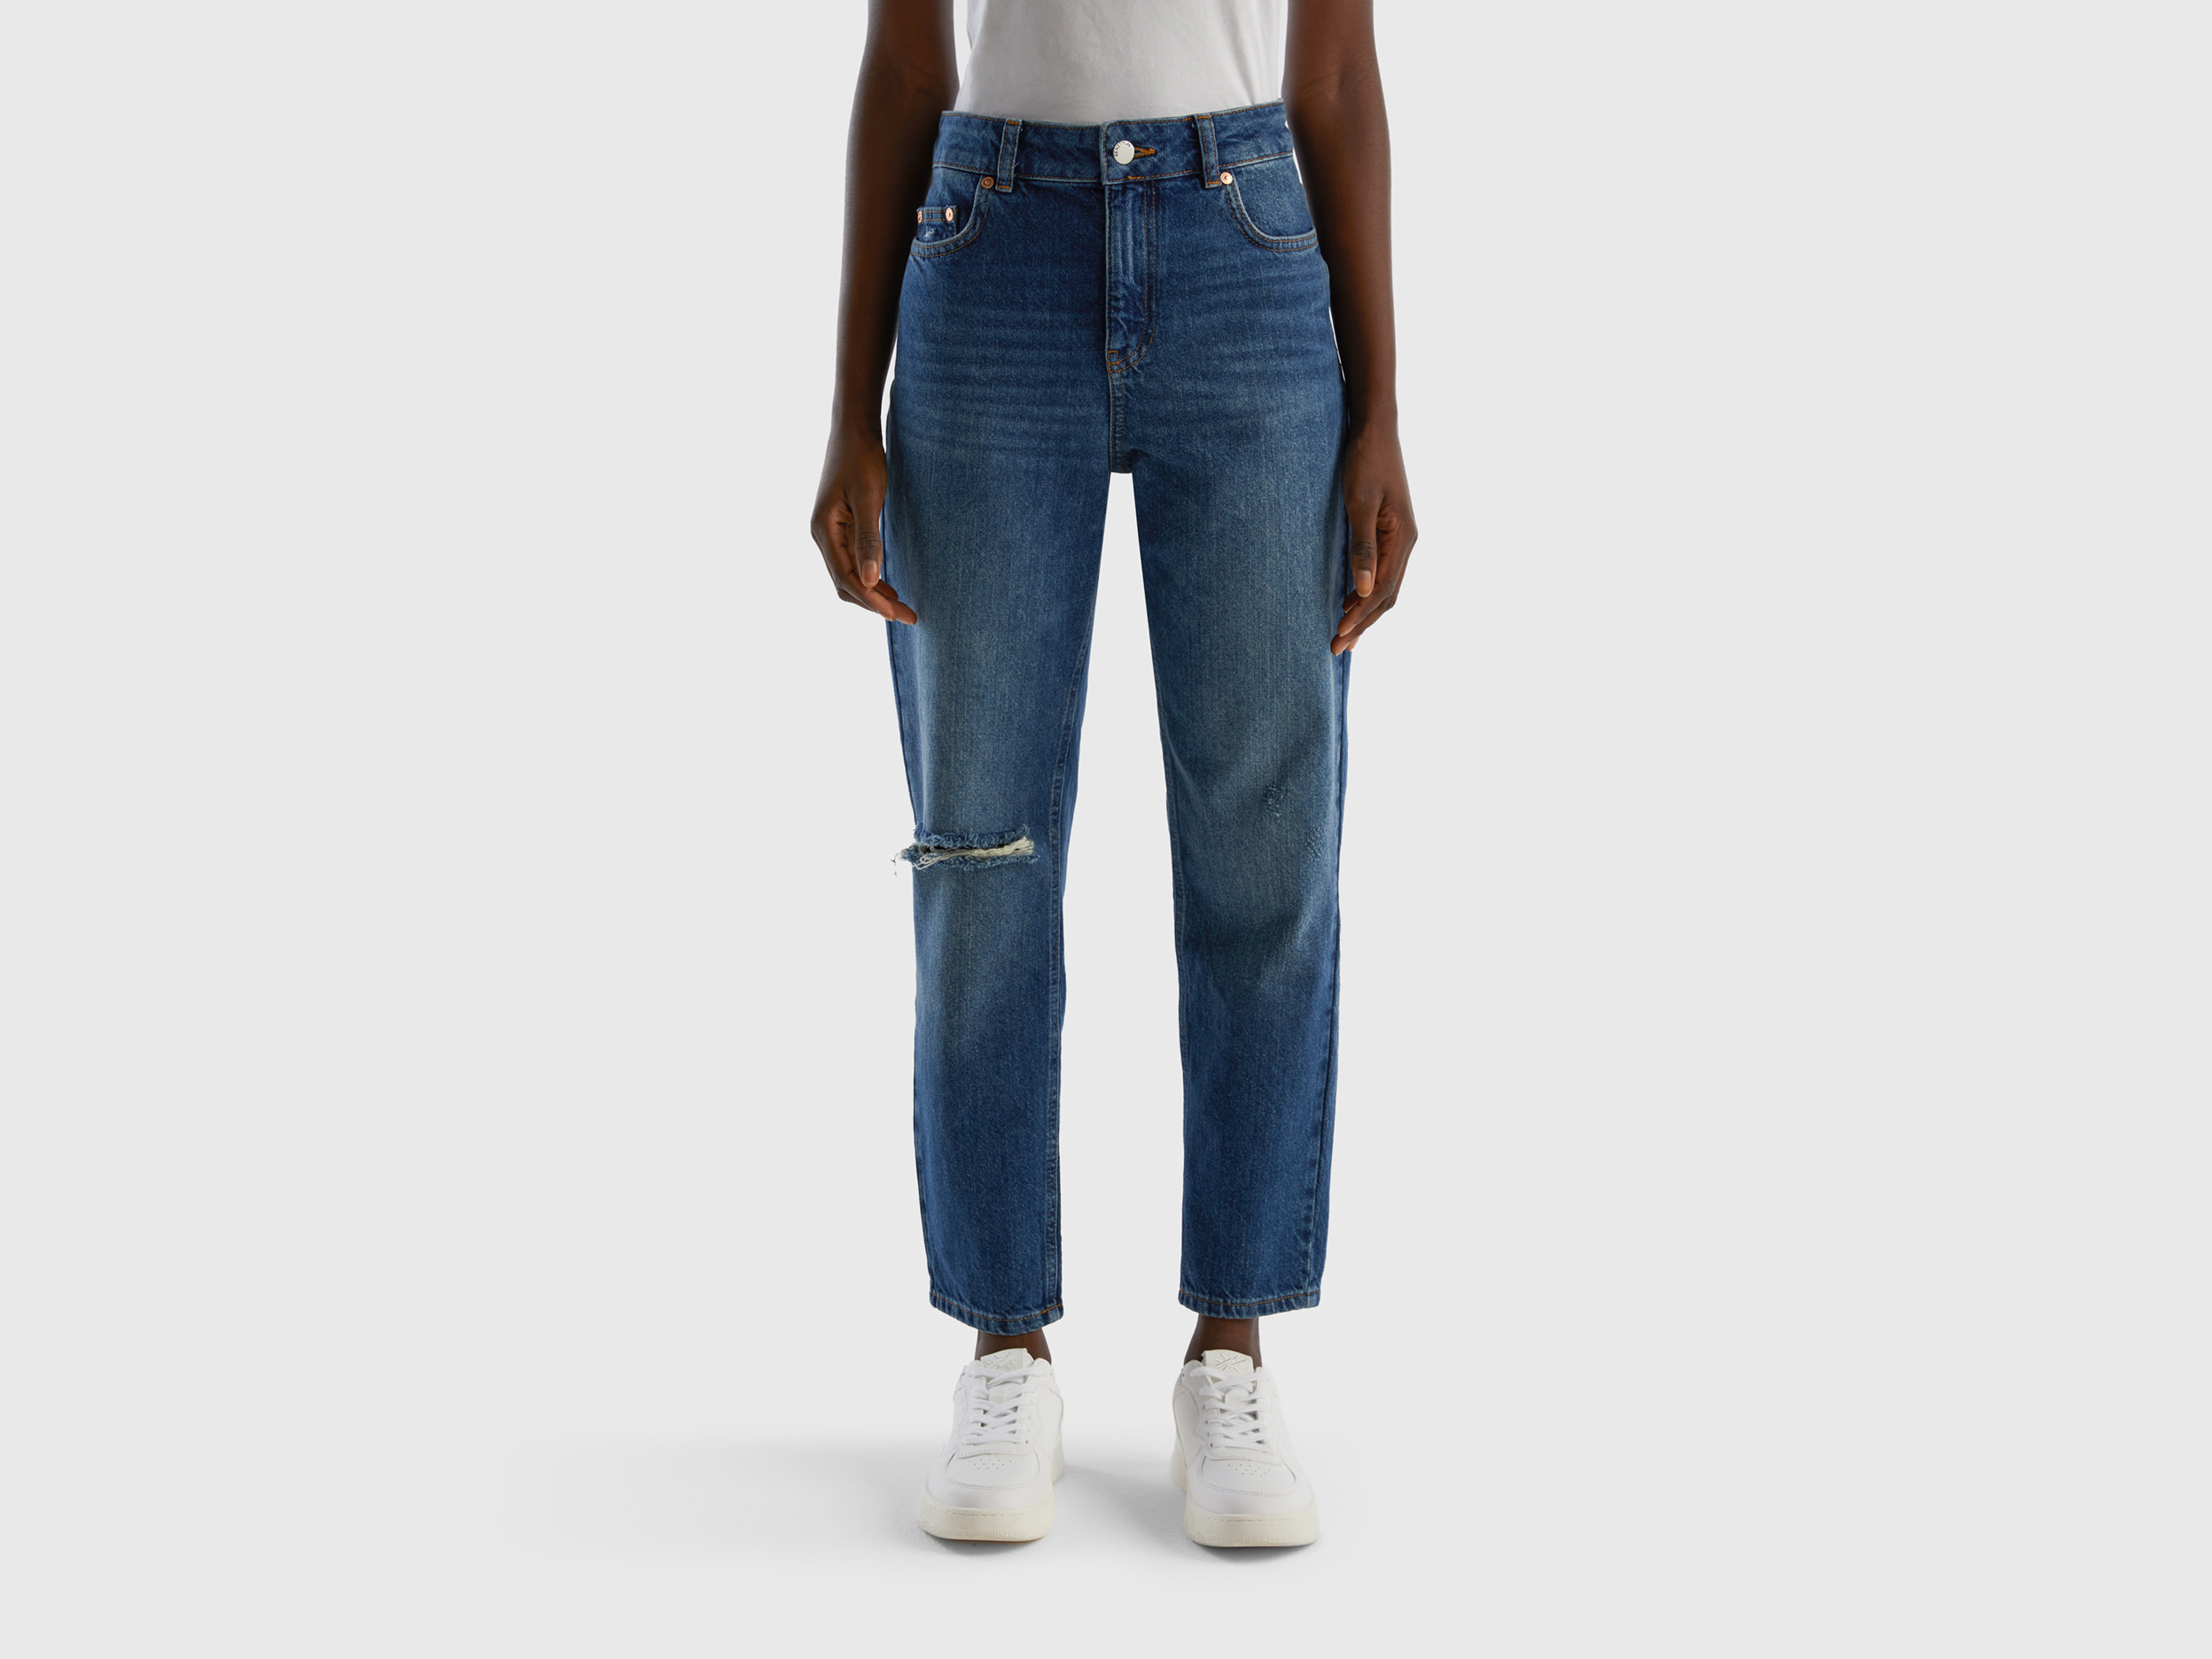 Benetton, Cropped High-waisted Jeans, size 32, Dark Blue, Women